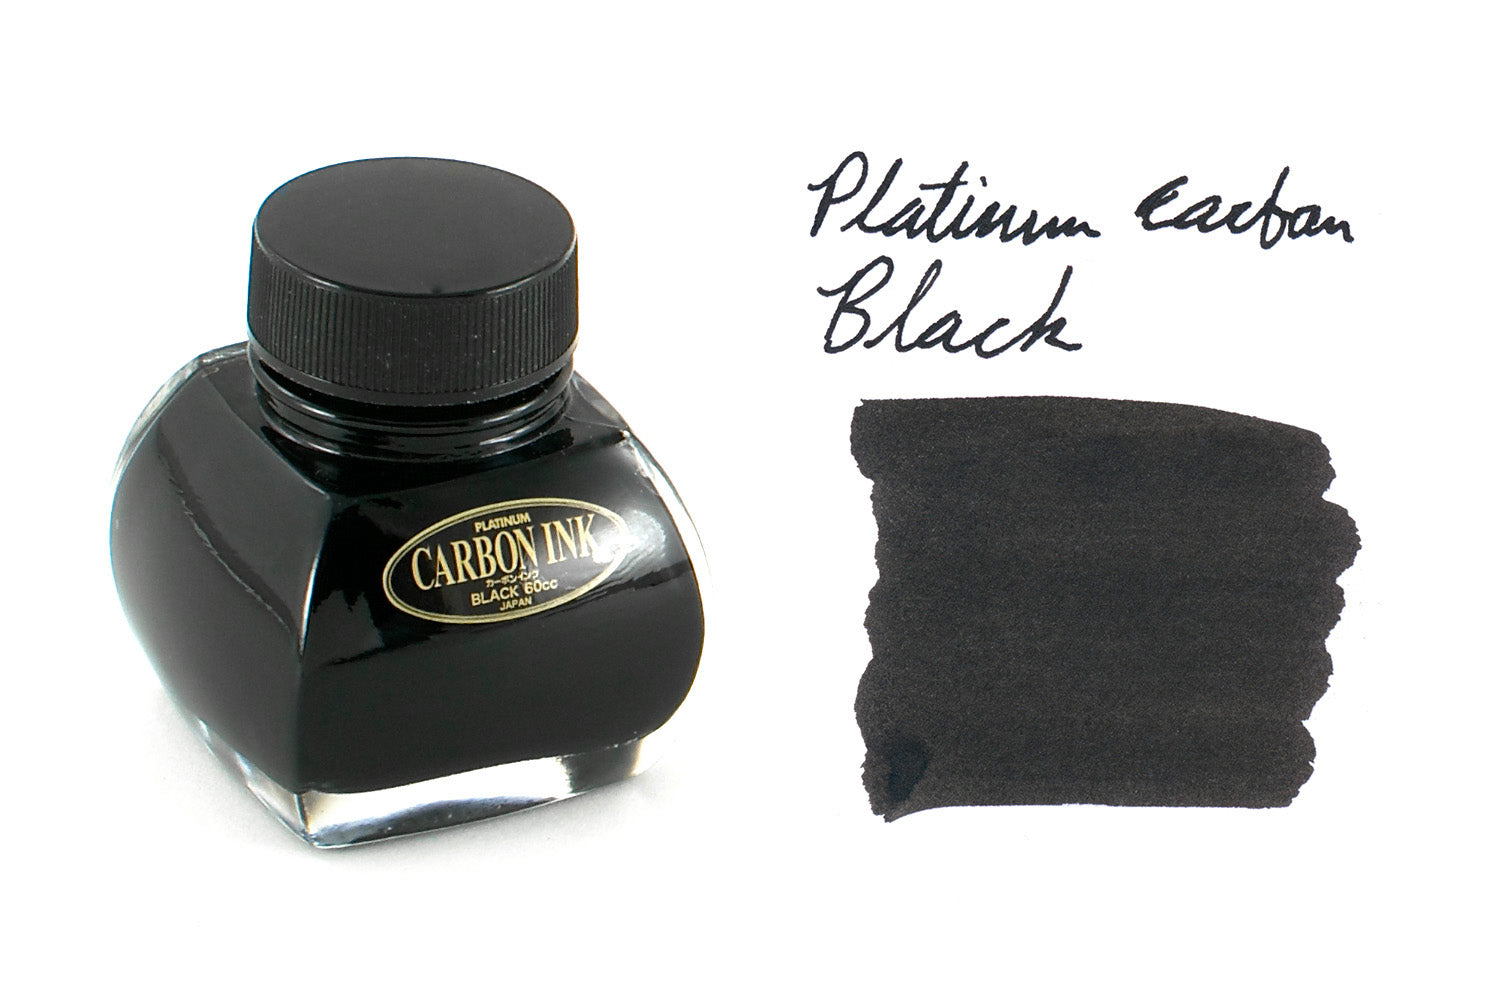 Platinum Carbon Black Ink Review 